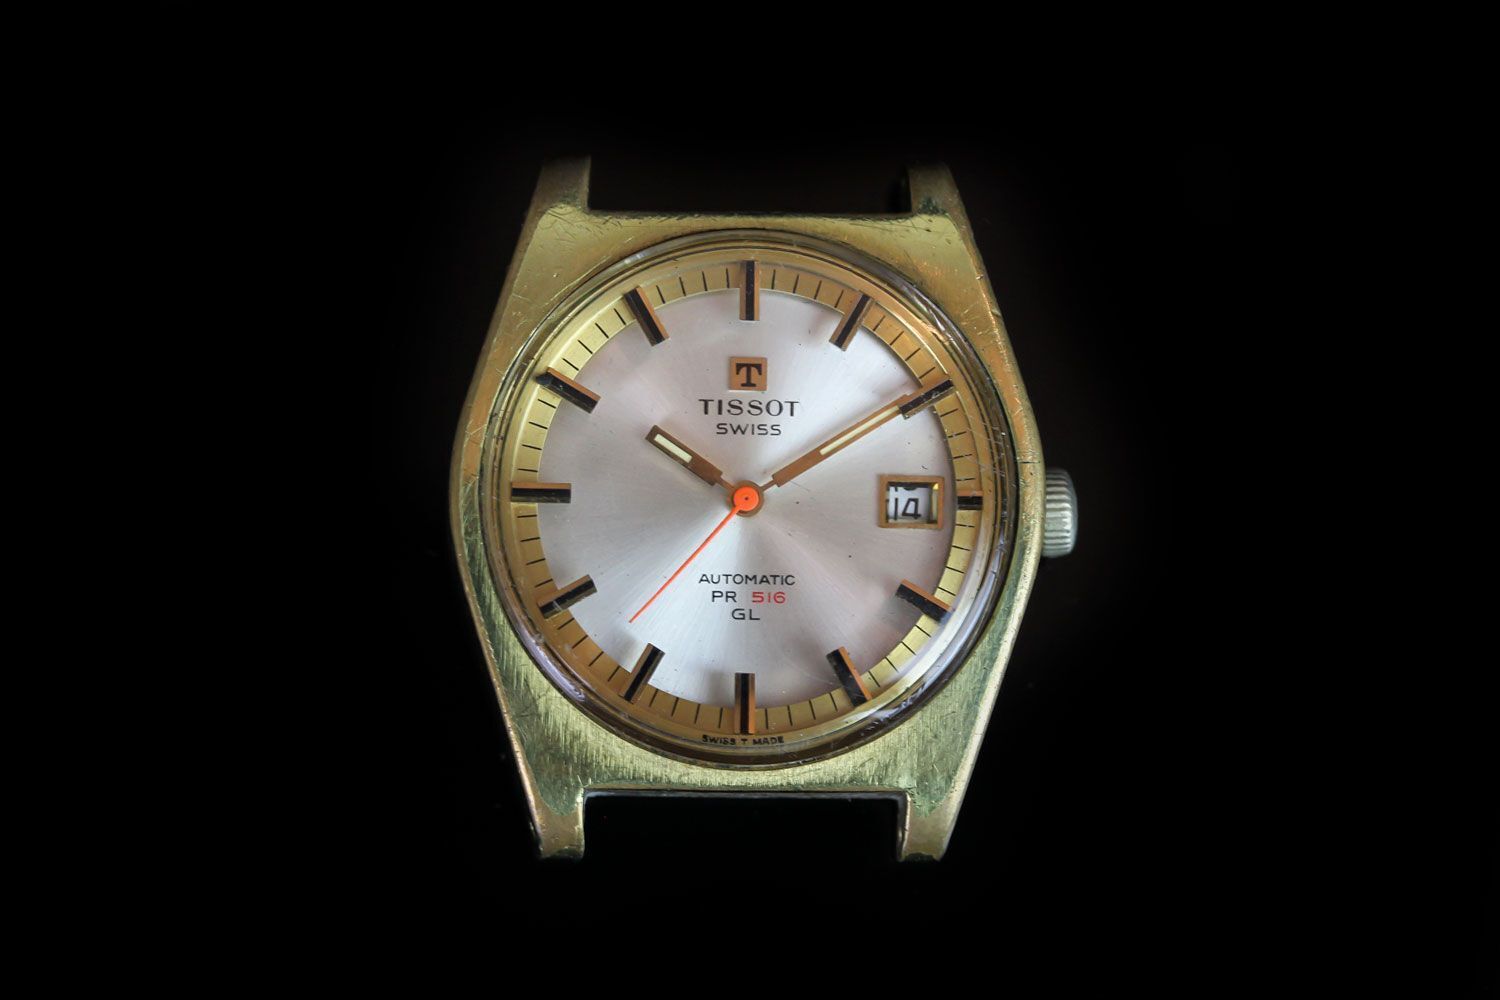 GENTLEMEN'S TISSOT AUTOMATIC PR 516 GL WRISTWATCH, circular silver dial with interesting raised